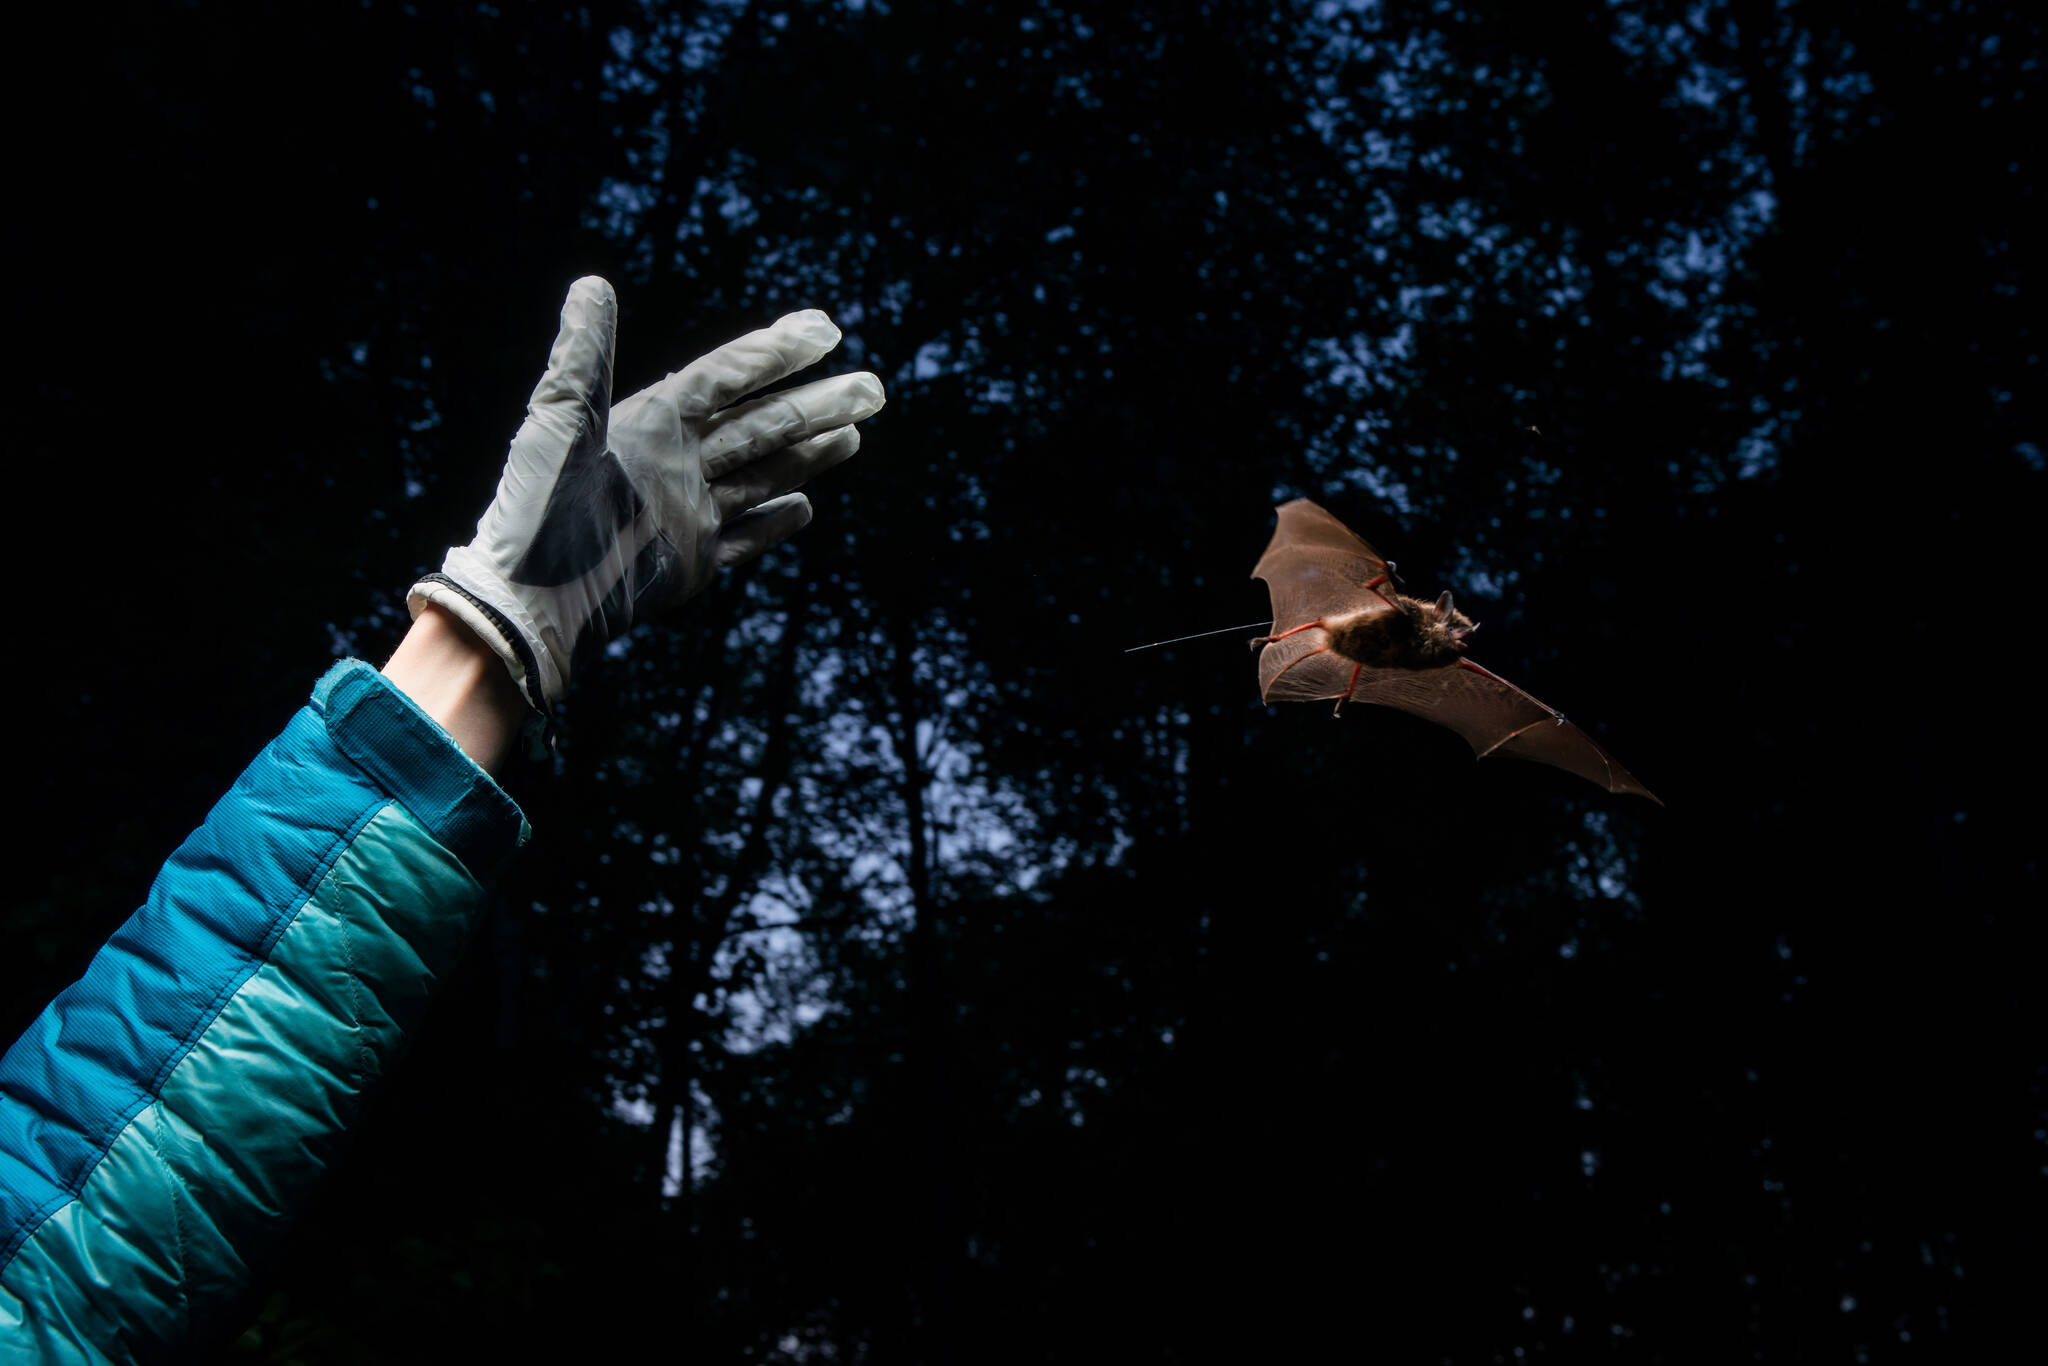 On Joint Base Elmendorf-Richardson in 2018, biologist Jesika Reimer releases a little brown bat with a radio transmitter on its back. (Courtesy Photo / James Evans, University of Alaska Anchorage)